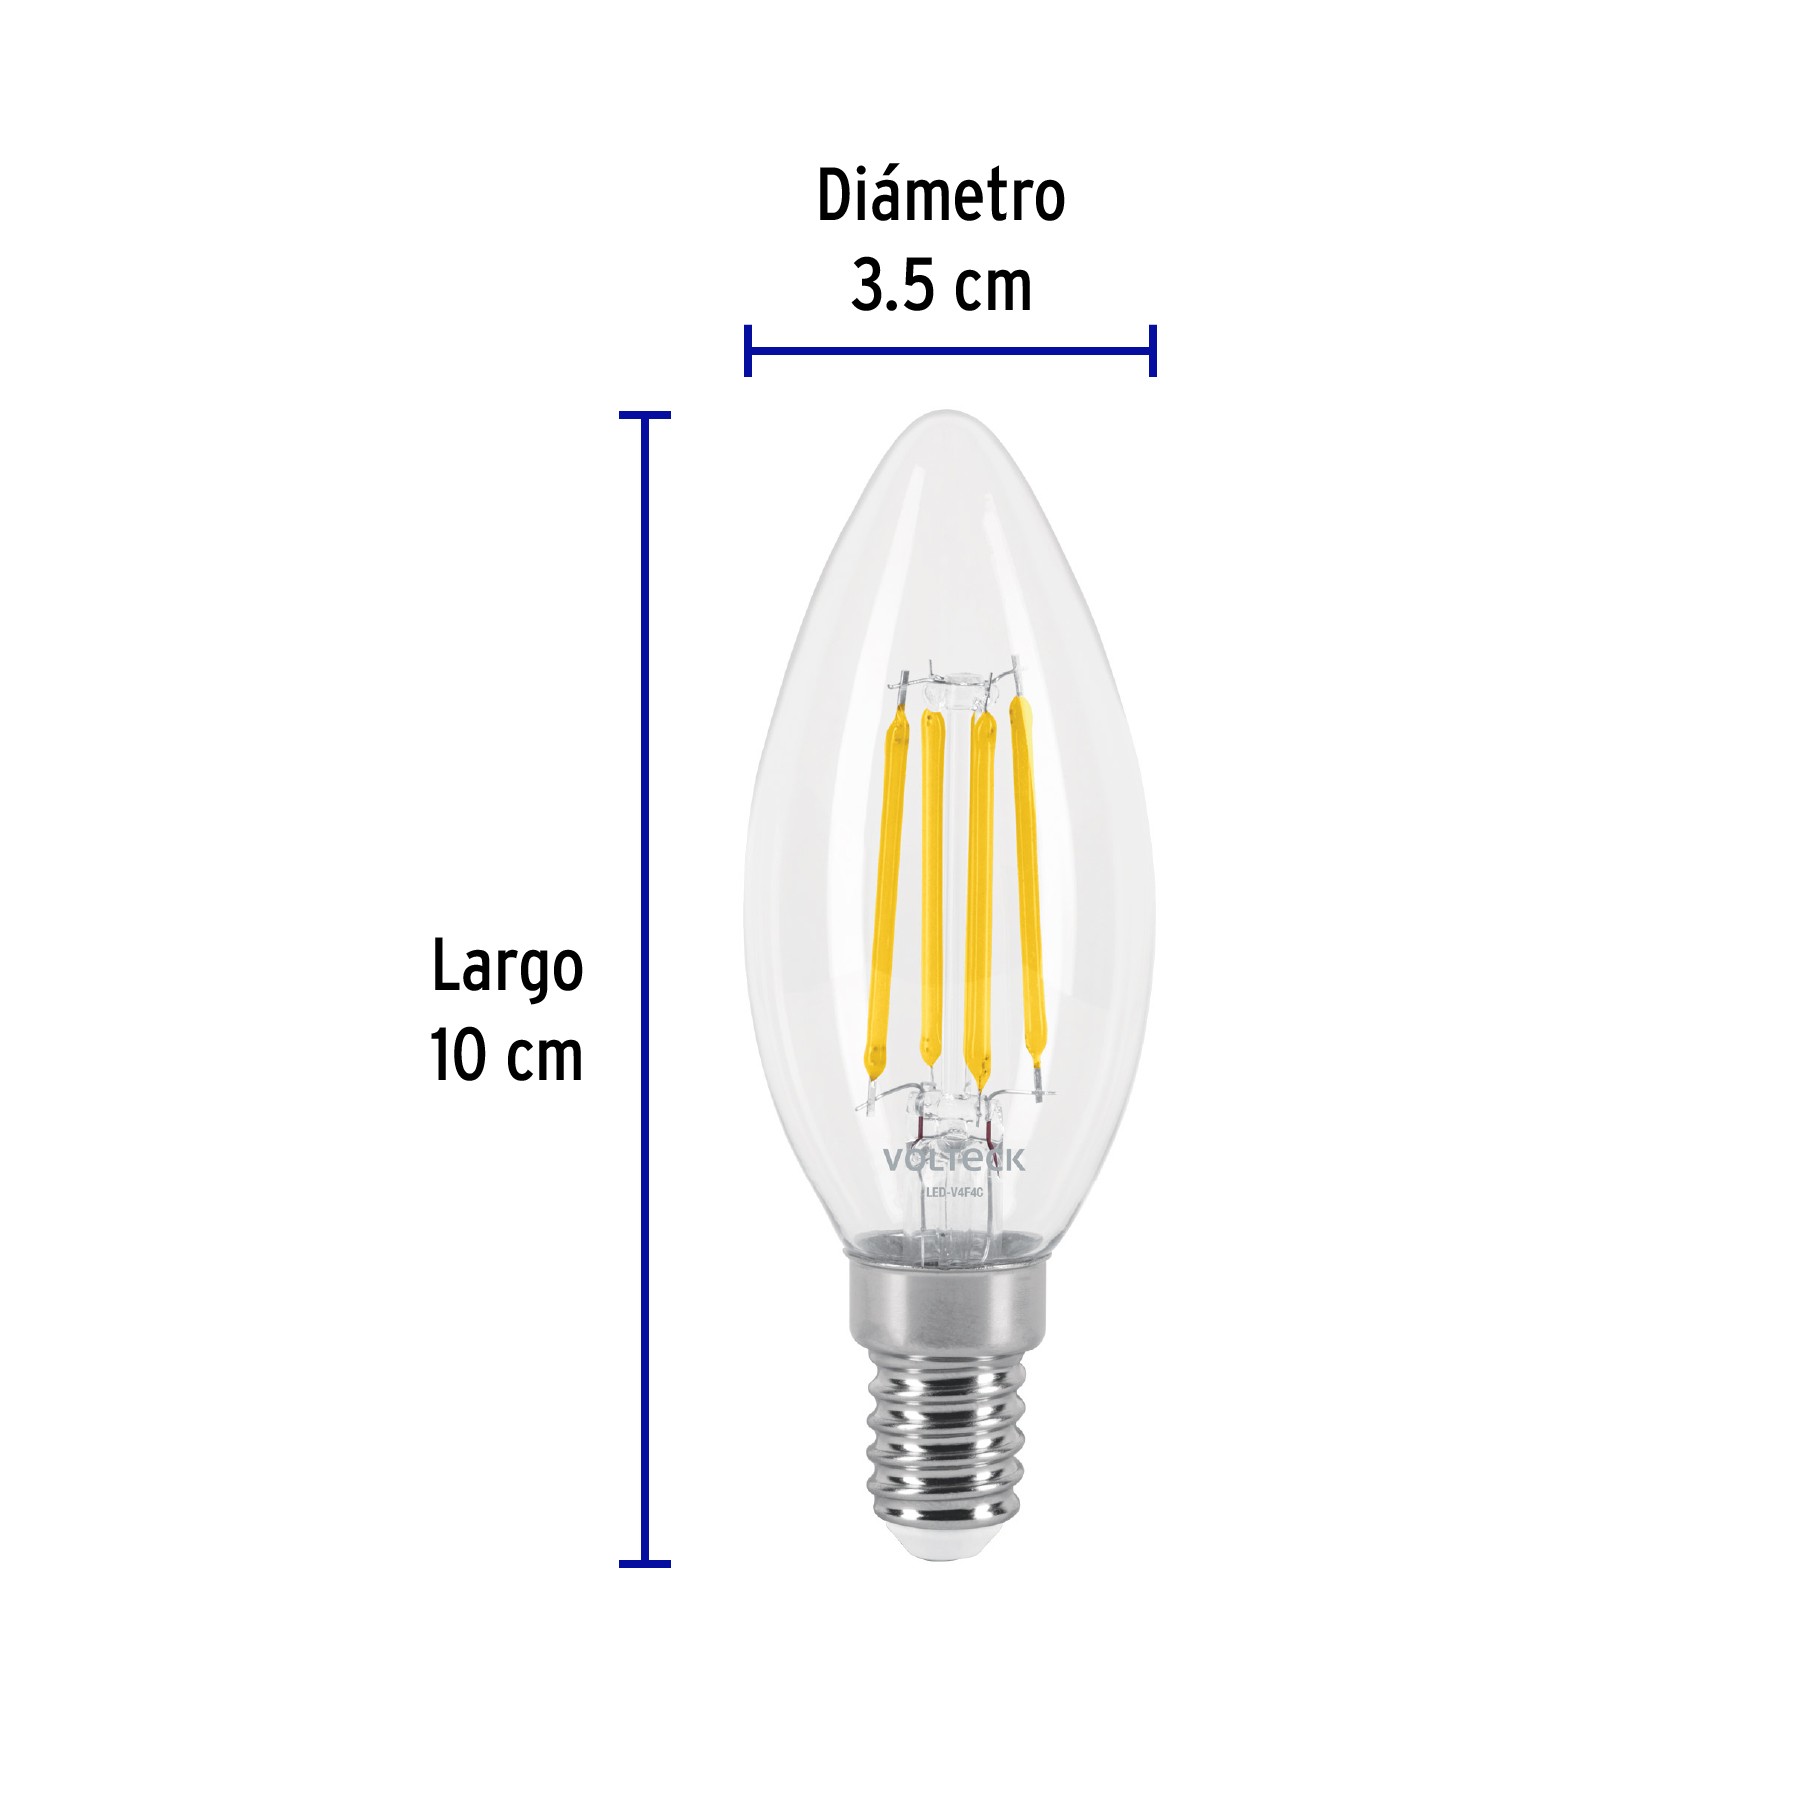 LAMPARA LED TIPO VELA 6 W LUZ CaLIDA E14 – Pintolindo, encontrá lo